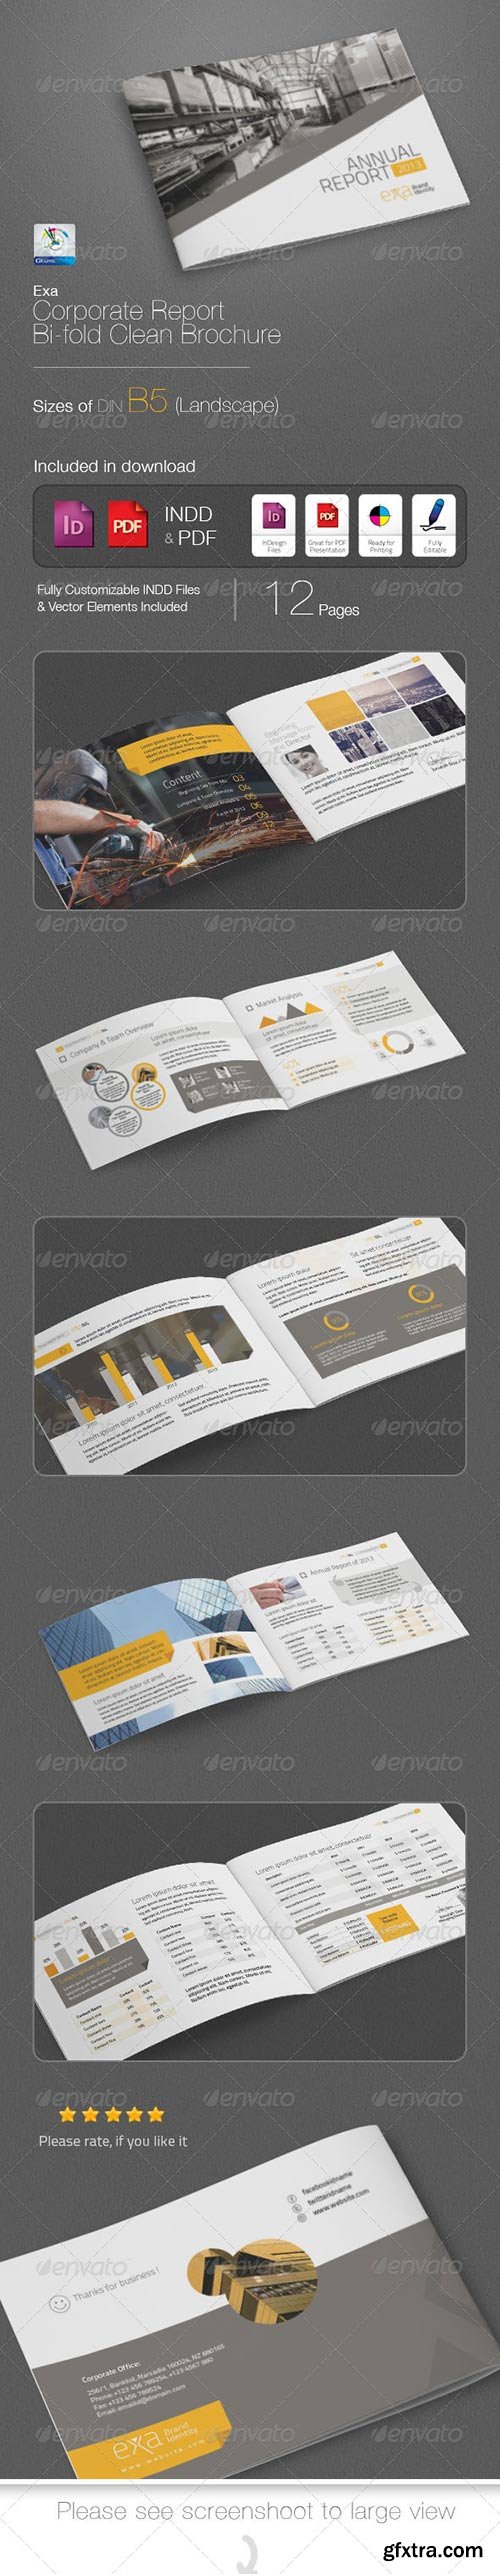 Graphicriver - Exa Business Report B5 Brochure 4916819